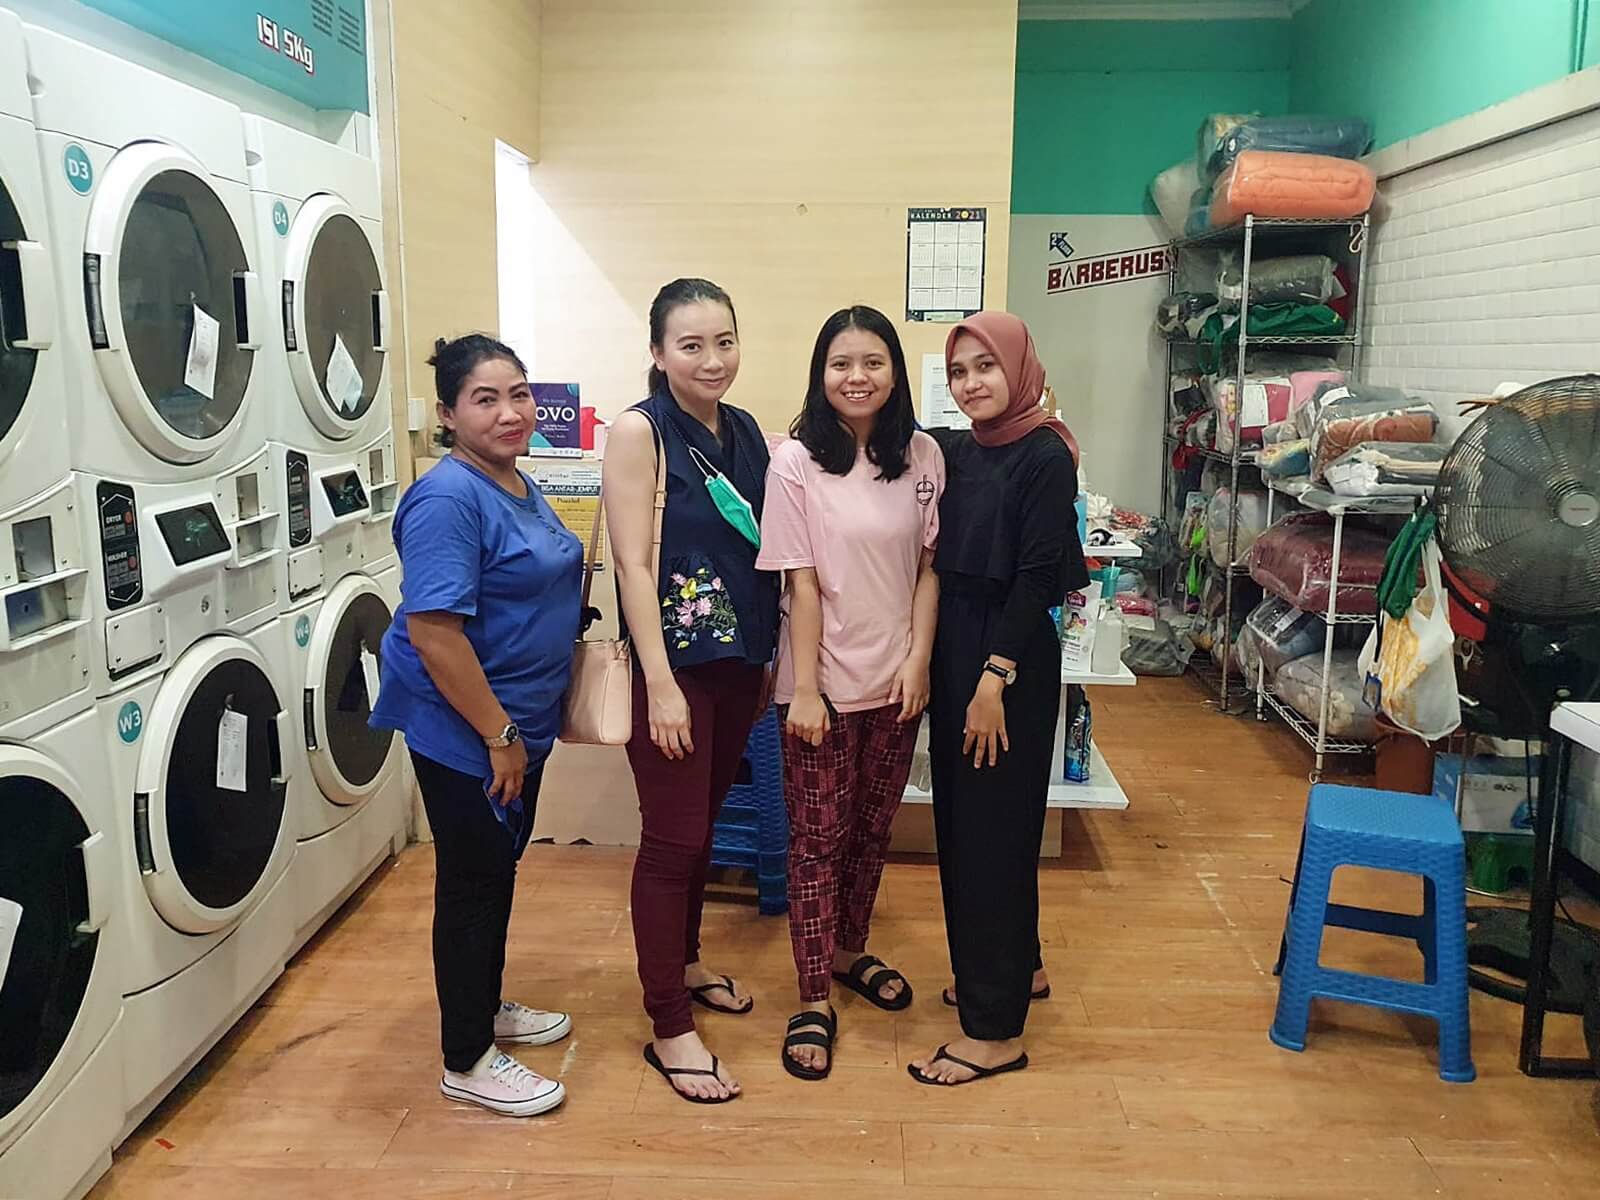 KLINBAR Koin Laundry Cucian Bersih dalam Waktu yang Efisien, Seefisien Pembayaran dengan GoPay